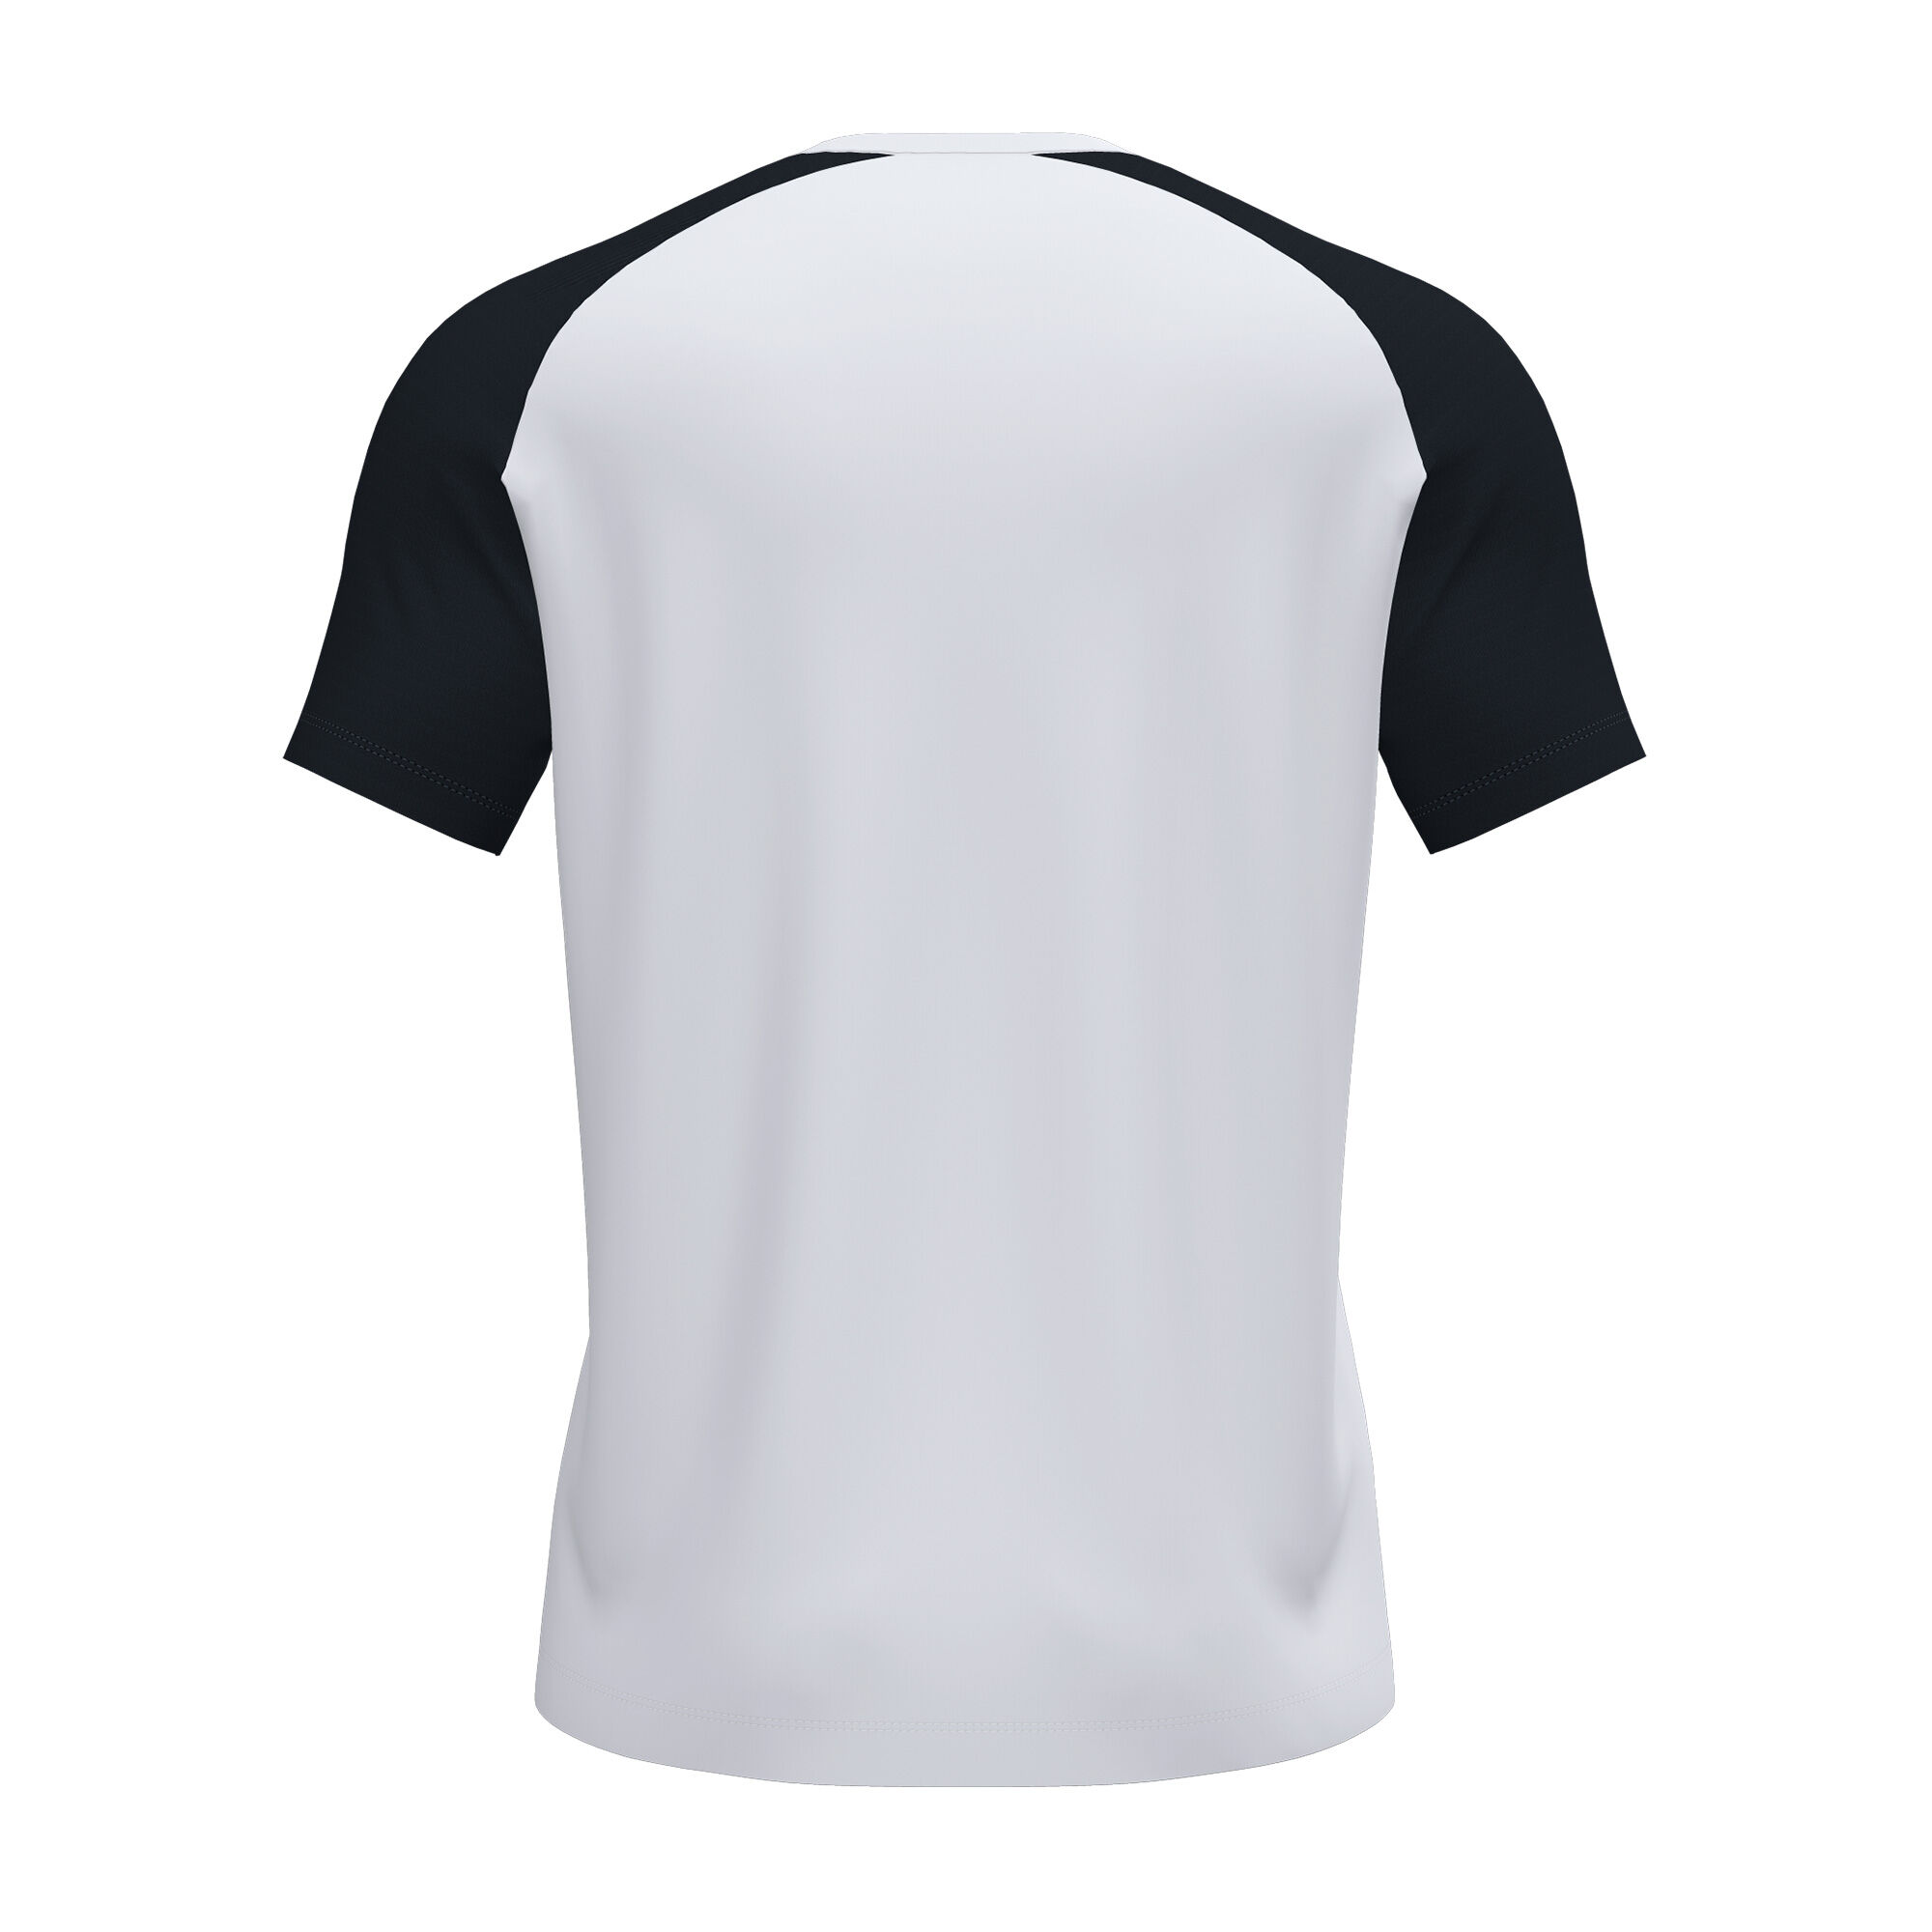 Camiseta manga corta hombre Academy IV blanco negro